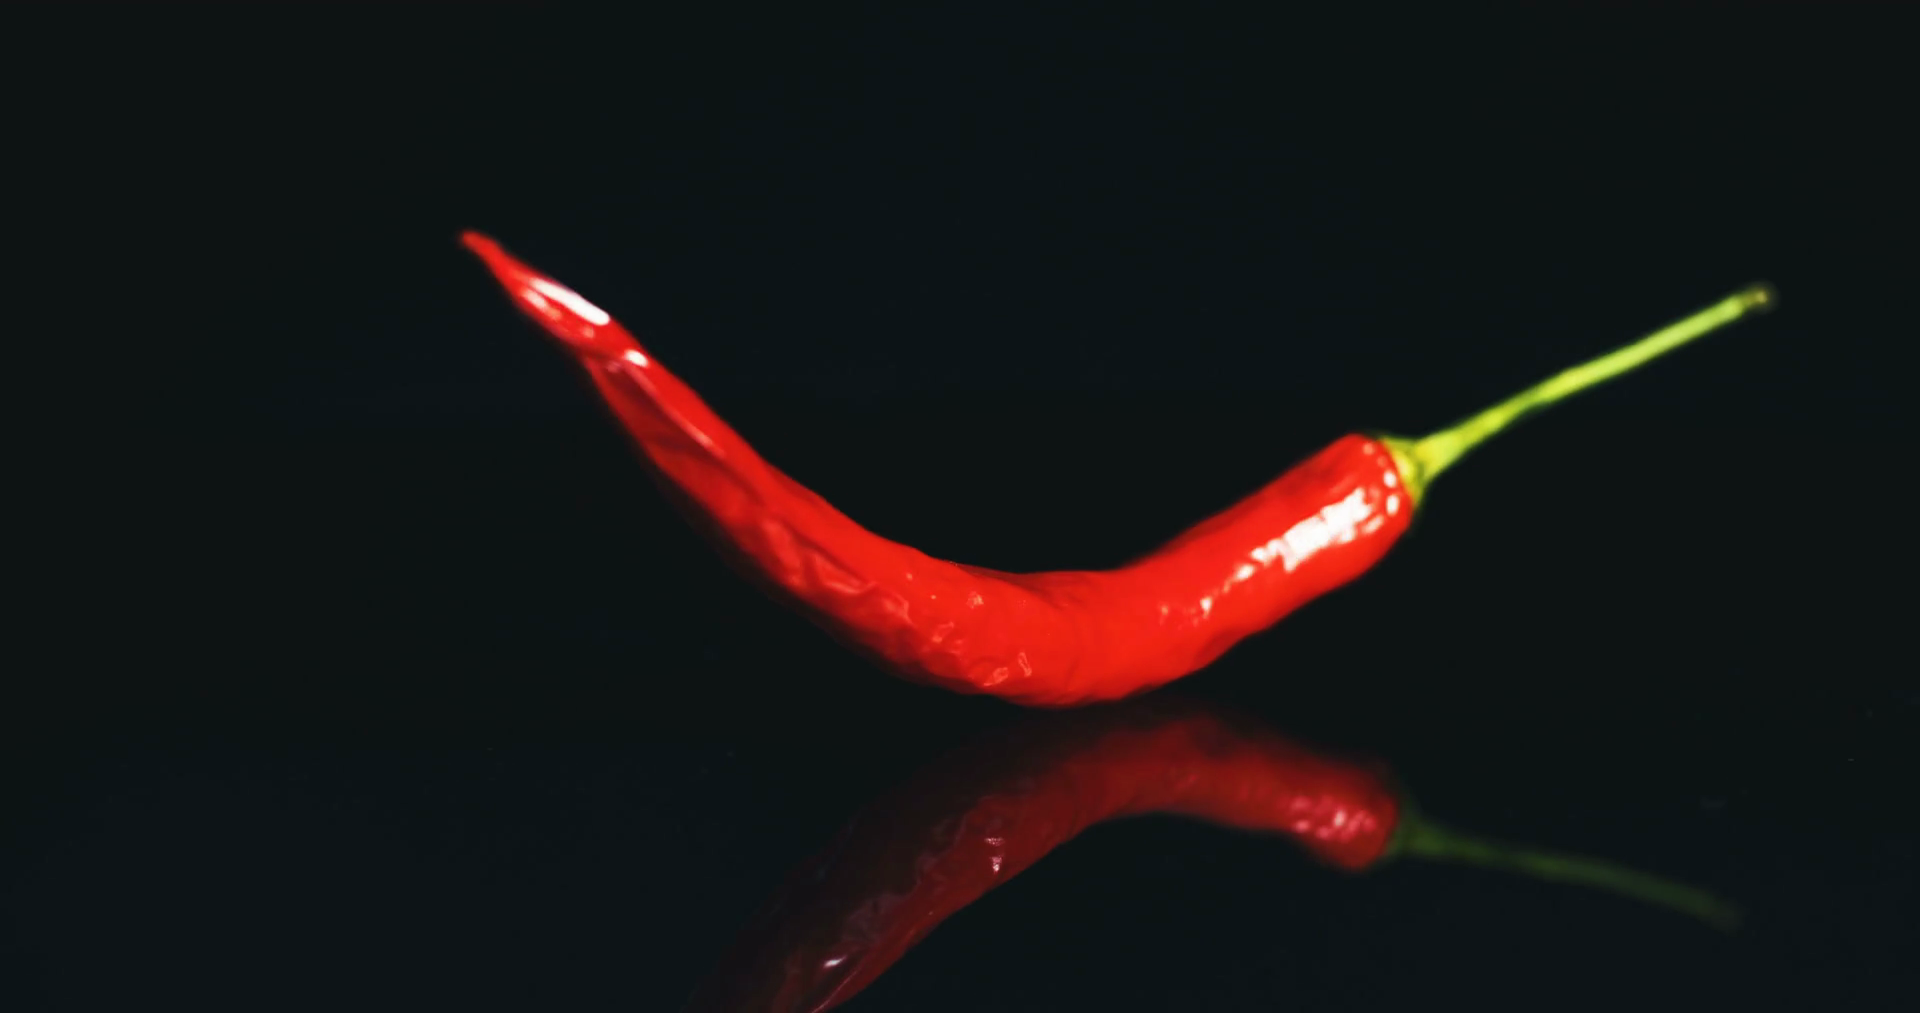 red chilli pepper. Black background 4K Stock Video Footage - Videoblocks